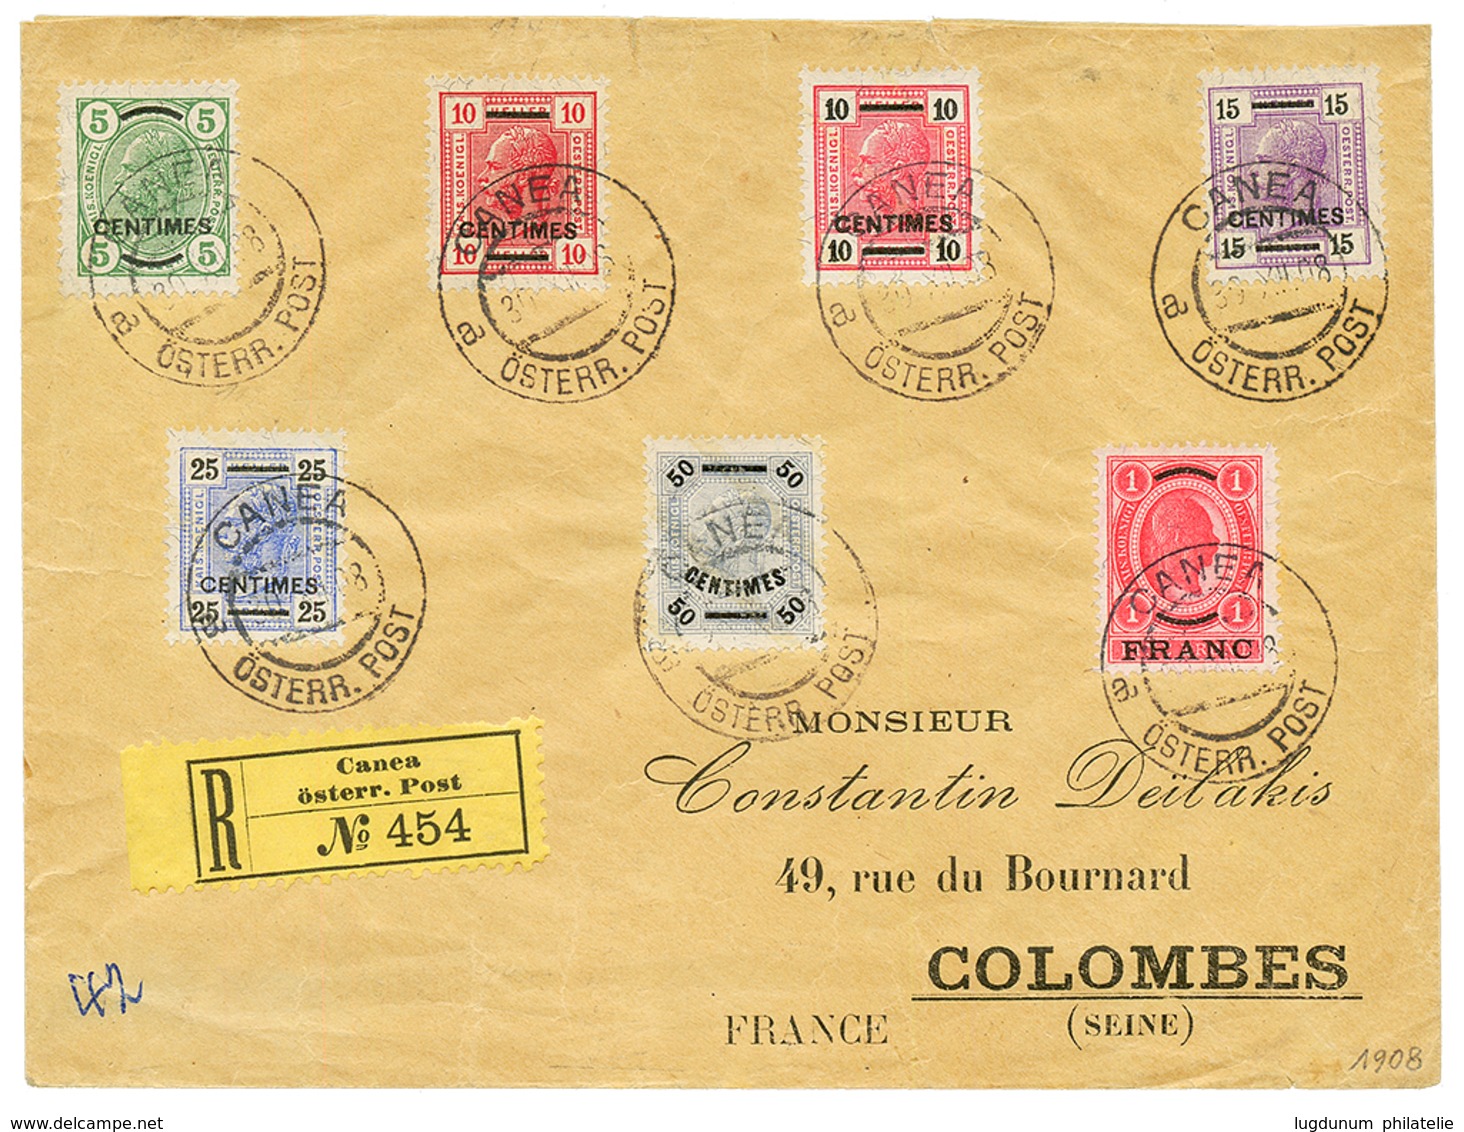 CANEA : 1908 5c To 1 FRANC Canc. CANEA On REGISTERED Envelope To FRANCE. Vvf. - Eastern Austria